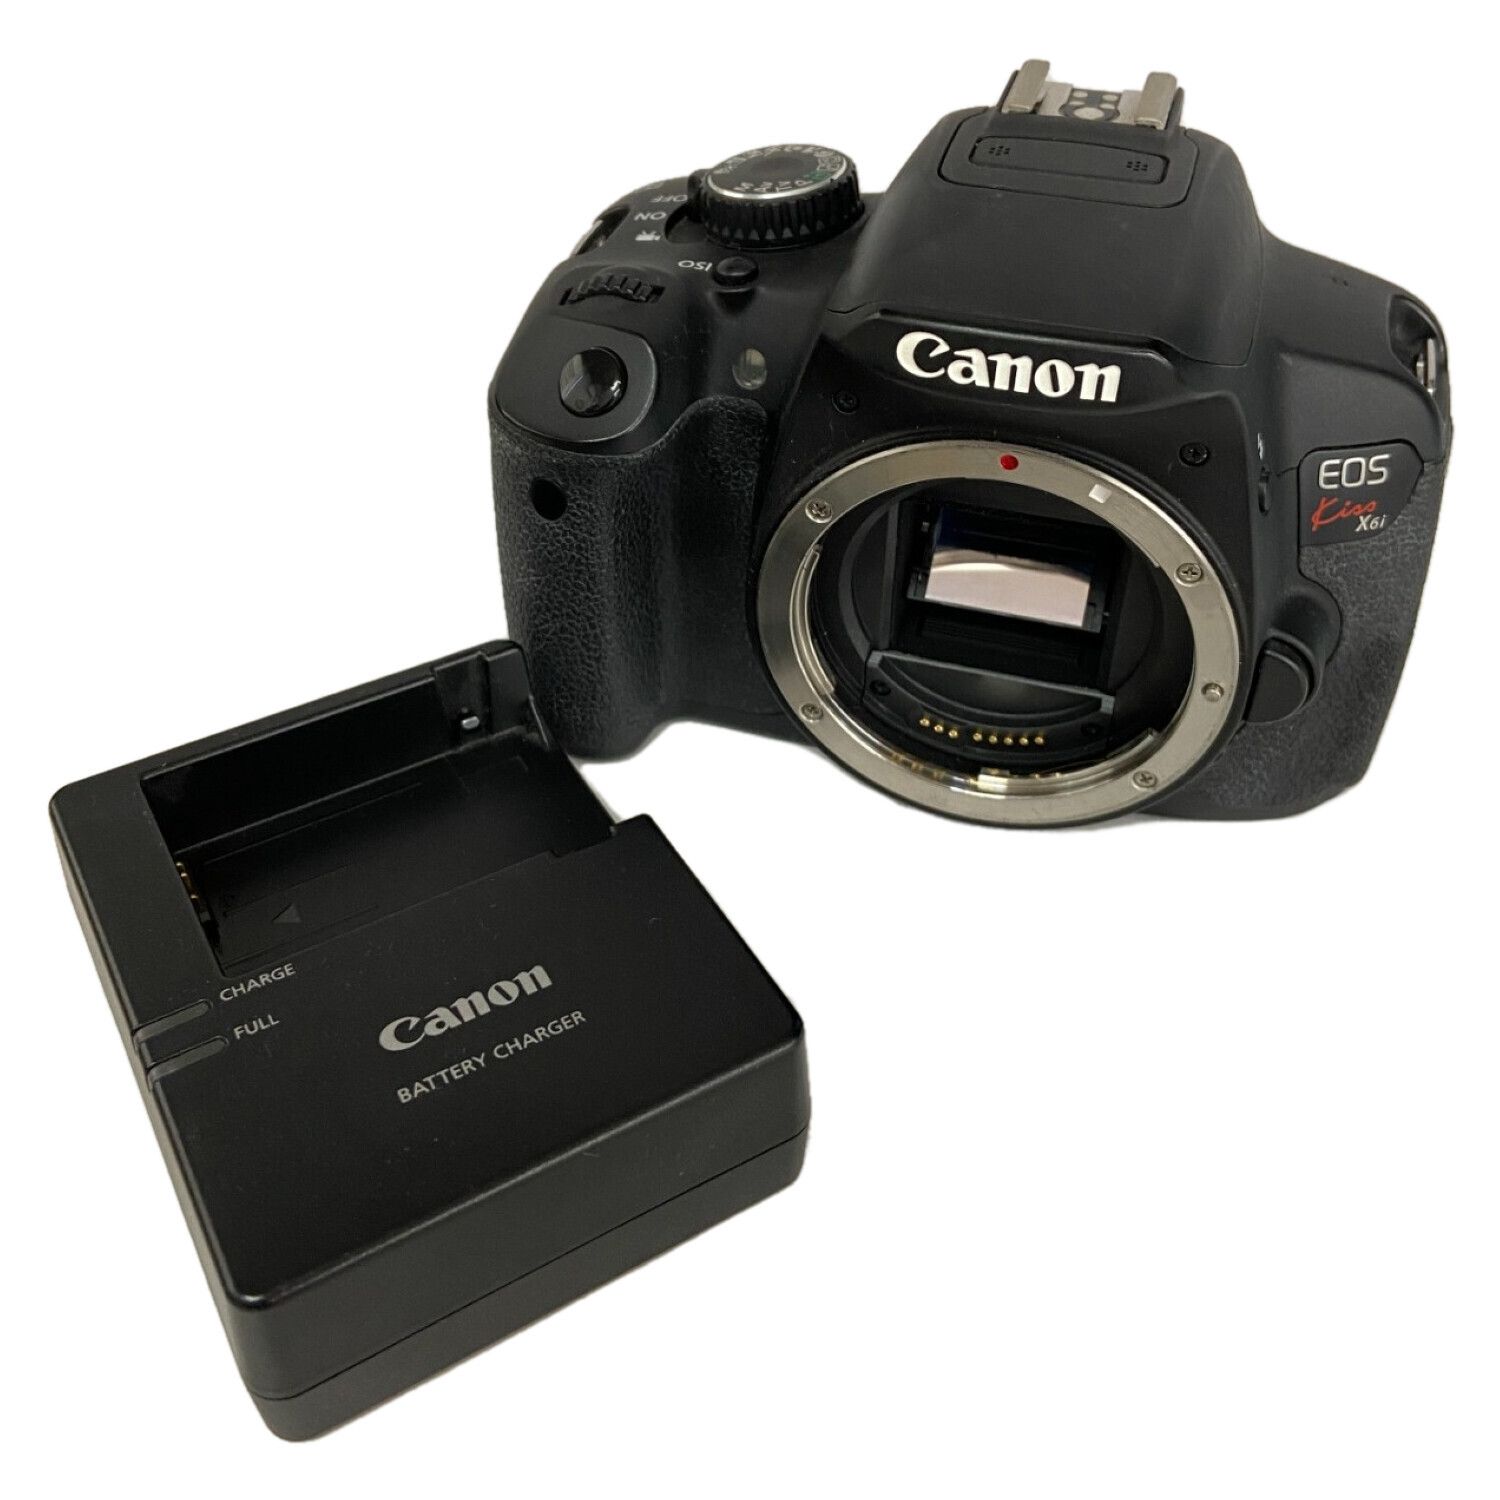 CANON (キャノン) デジタル一眼レフカメラ ボディ EOS kiss X6i 専用電池 SDカード対応  071033001033｜トレファクONLINE